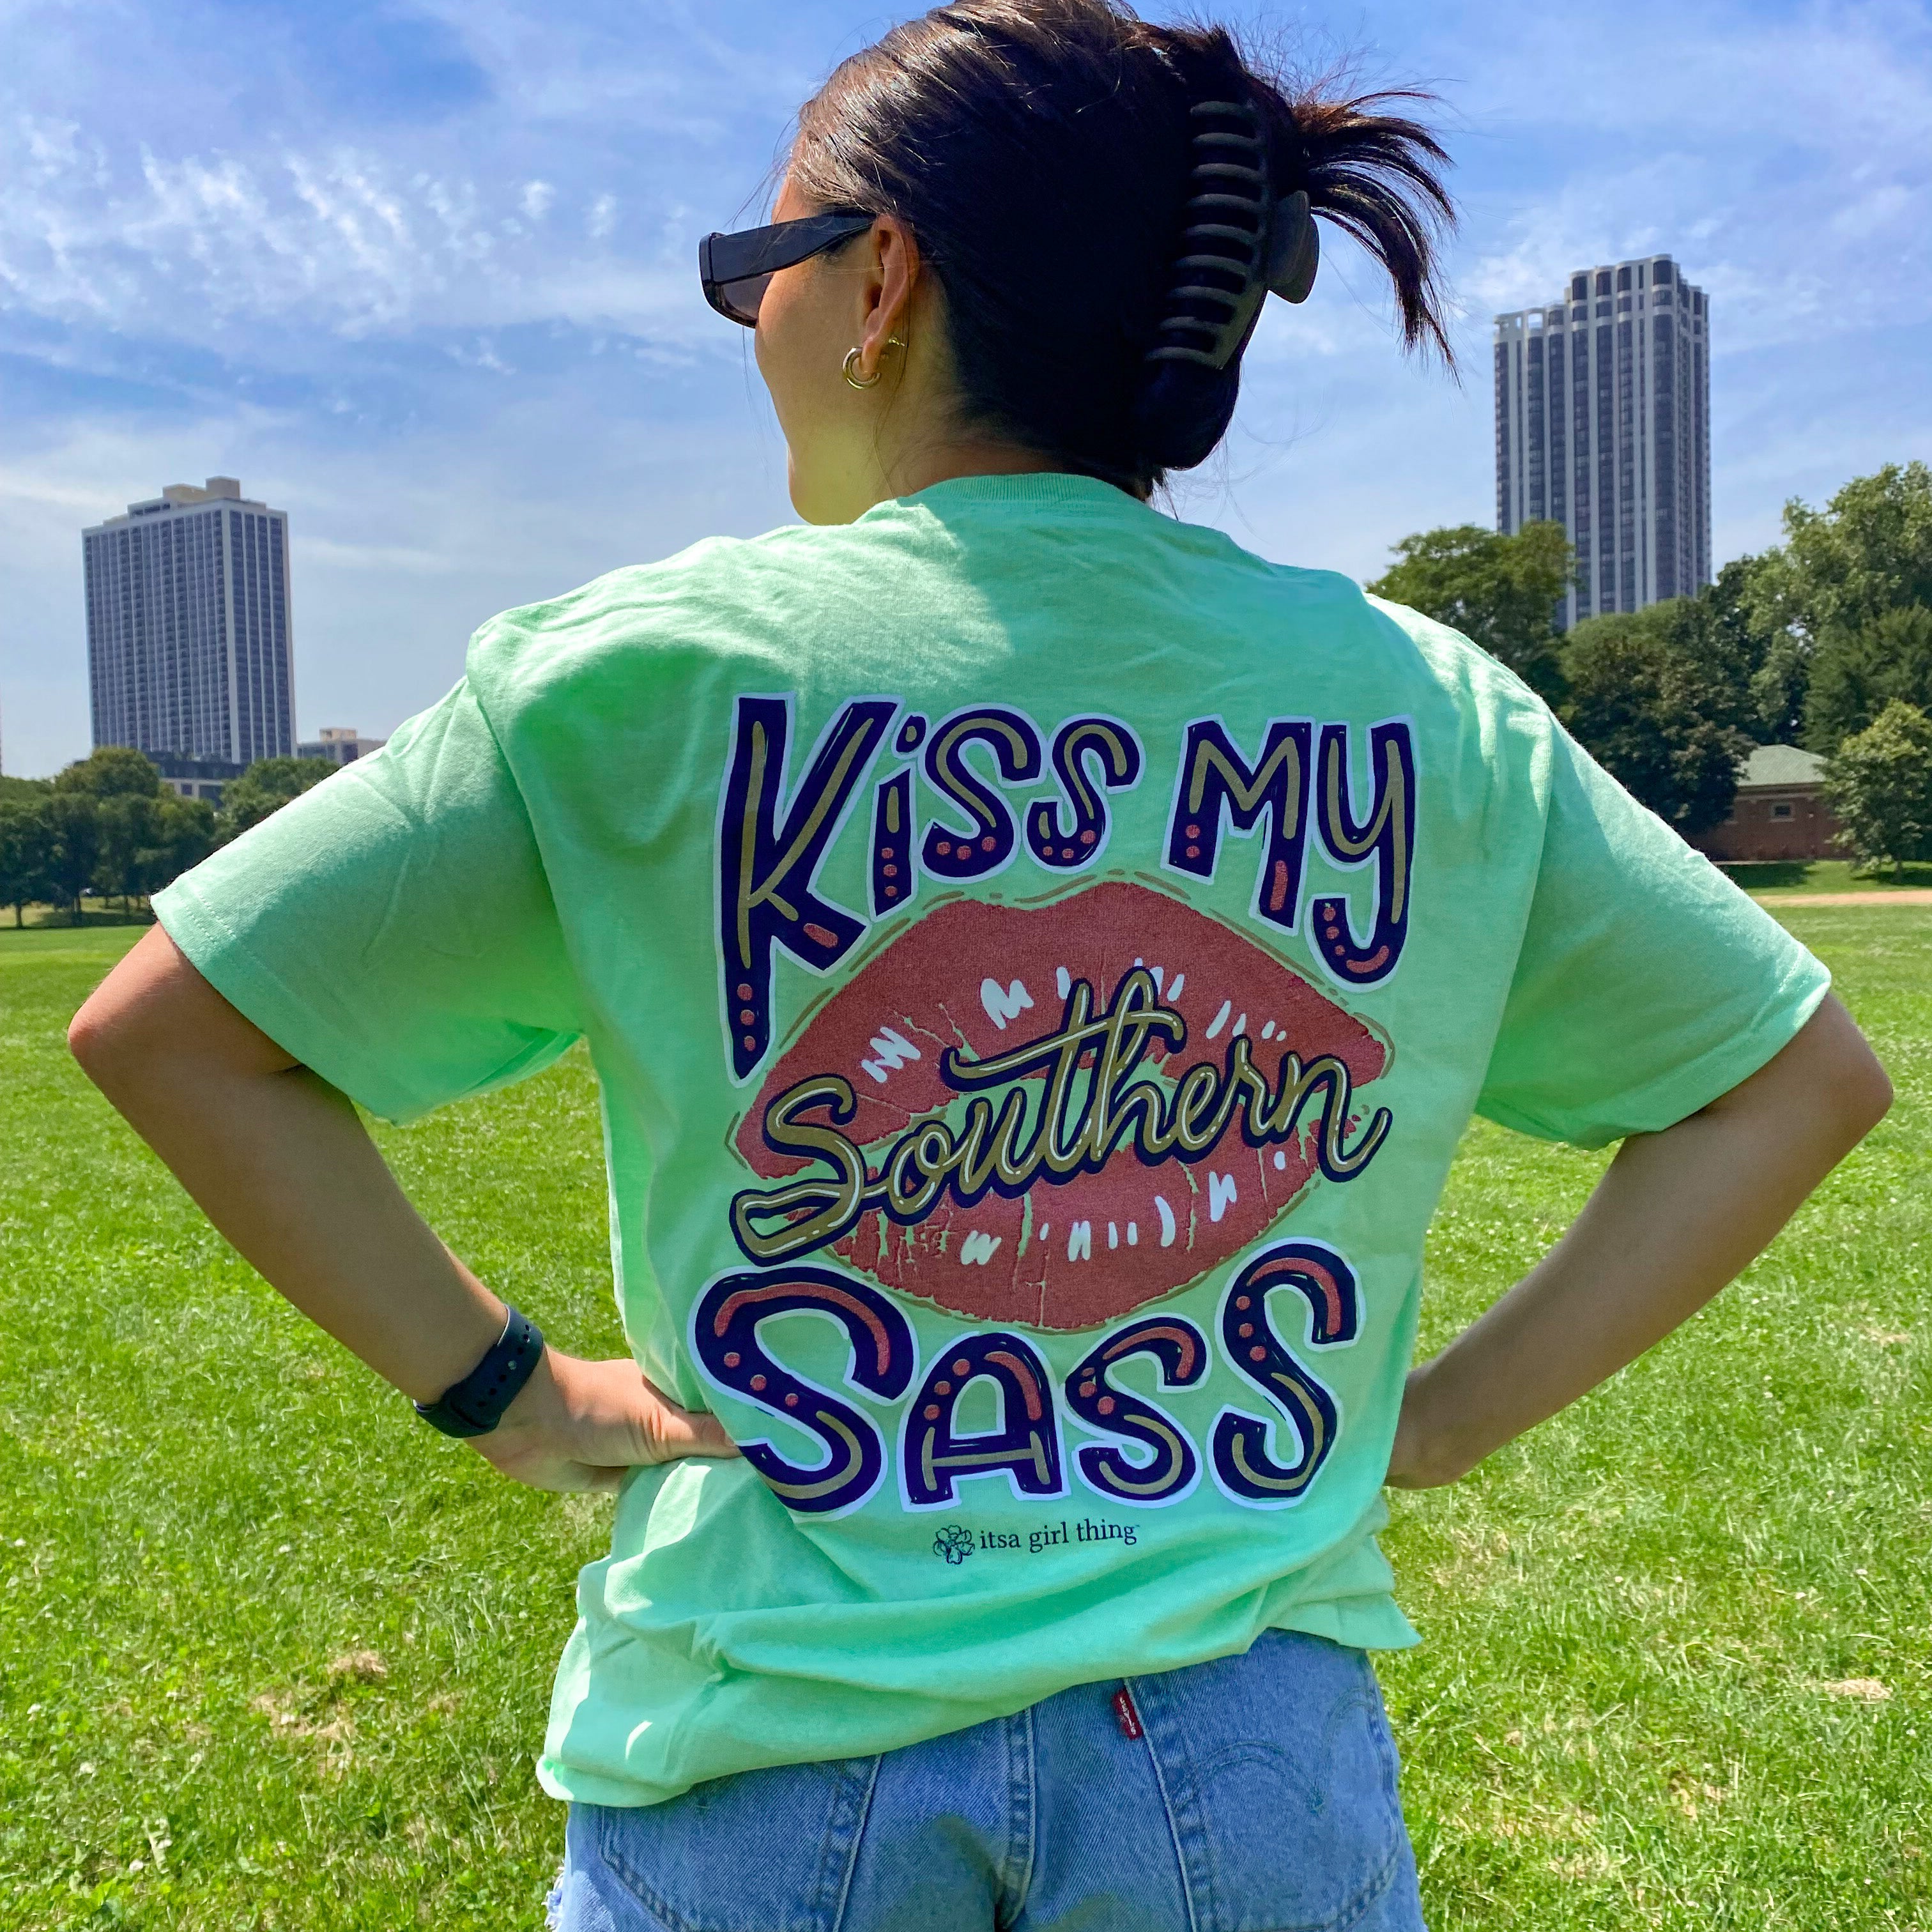 Kiss My Southern Sass- Sassy Lips T-Shirt